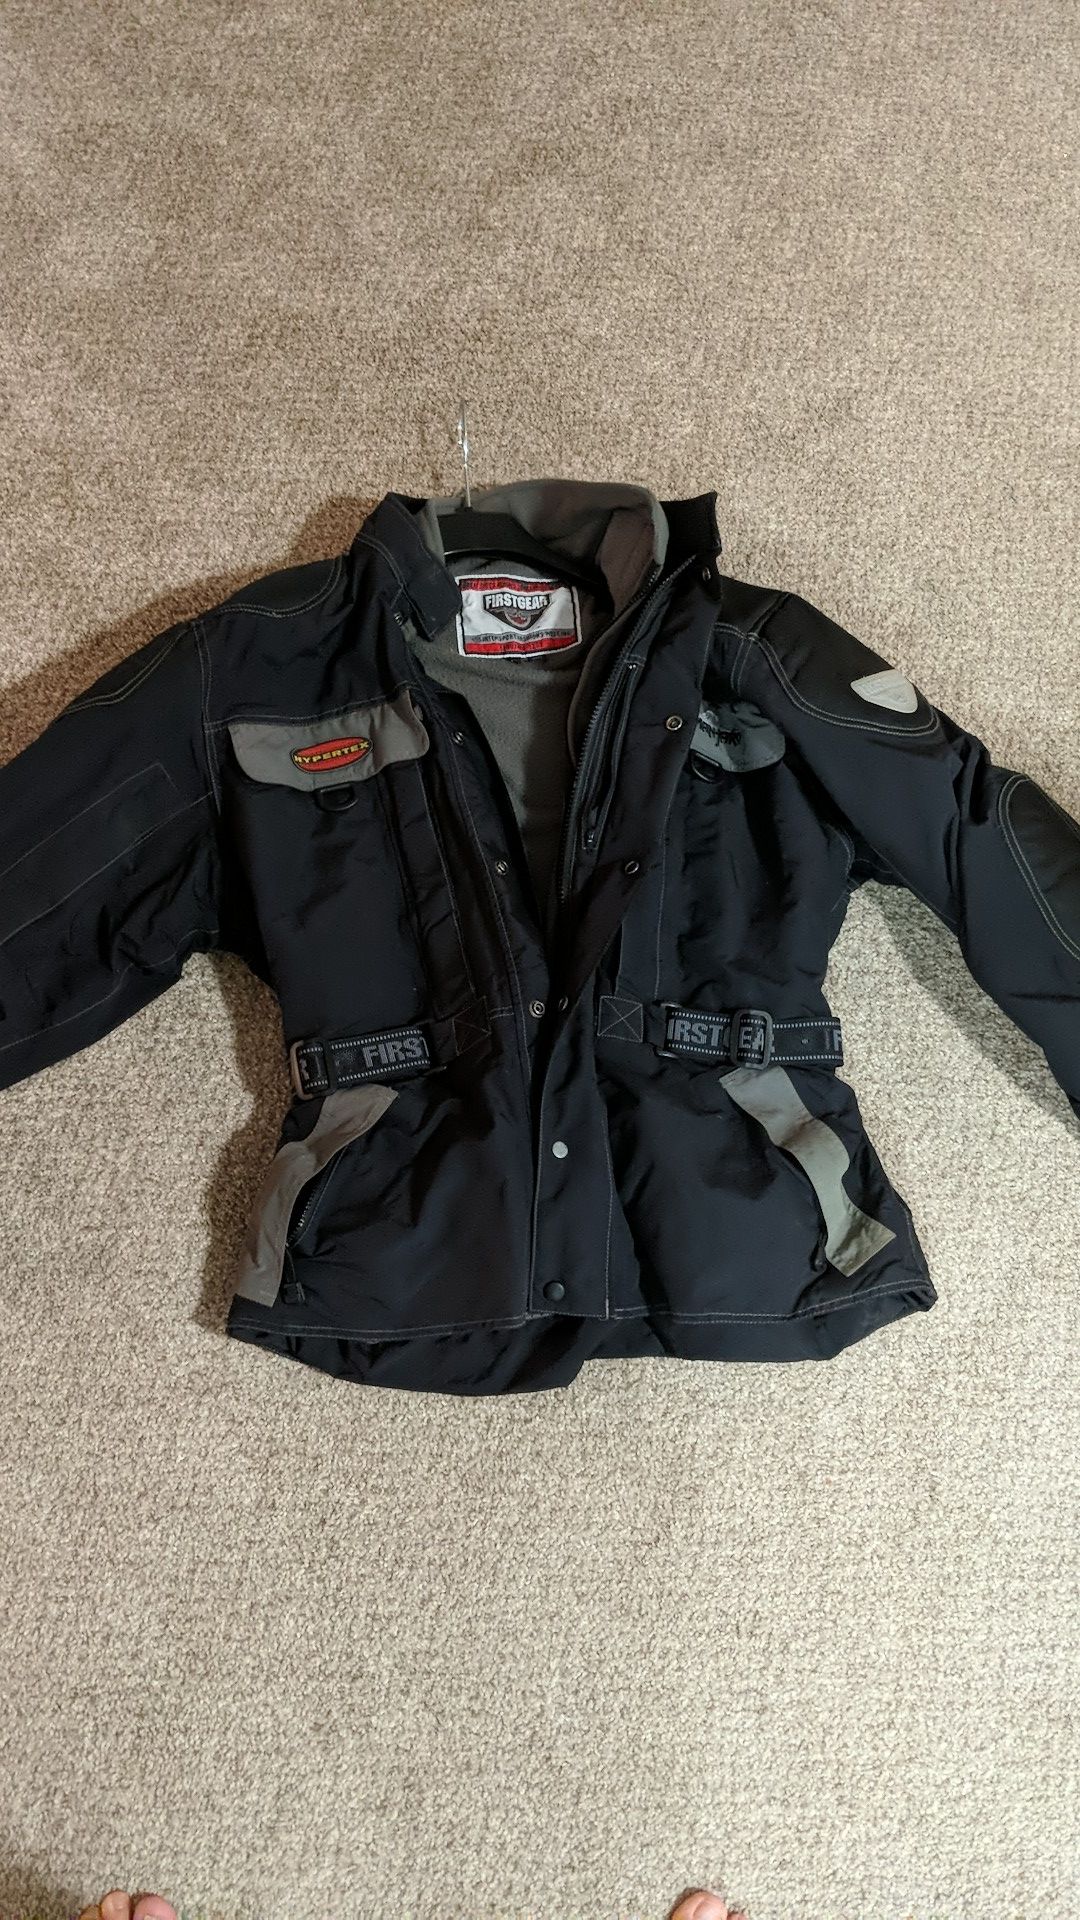 Motorcycle jacket, First Gear Kilimanjaro, Winter jacket